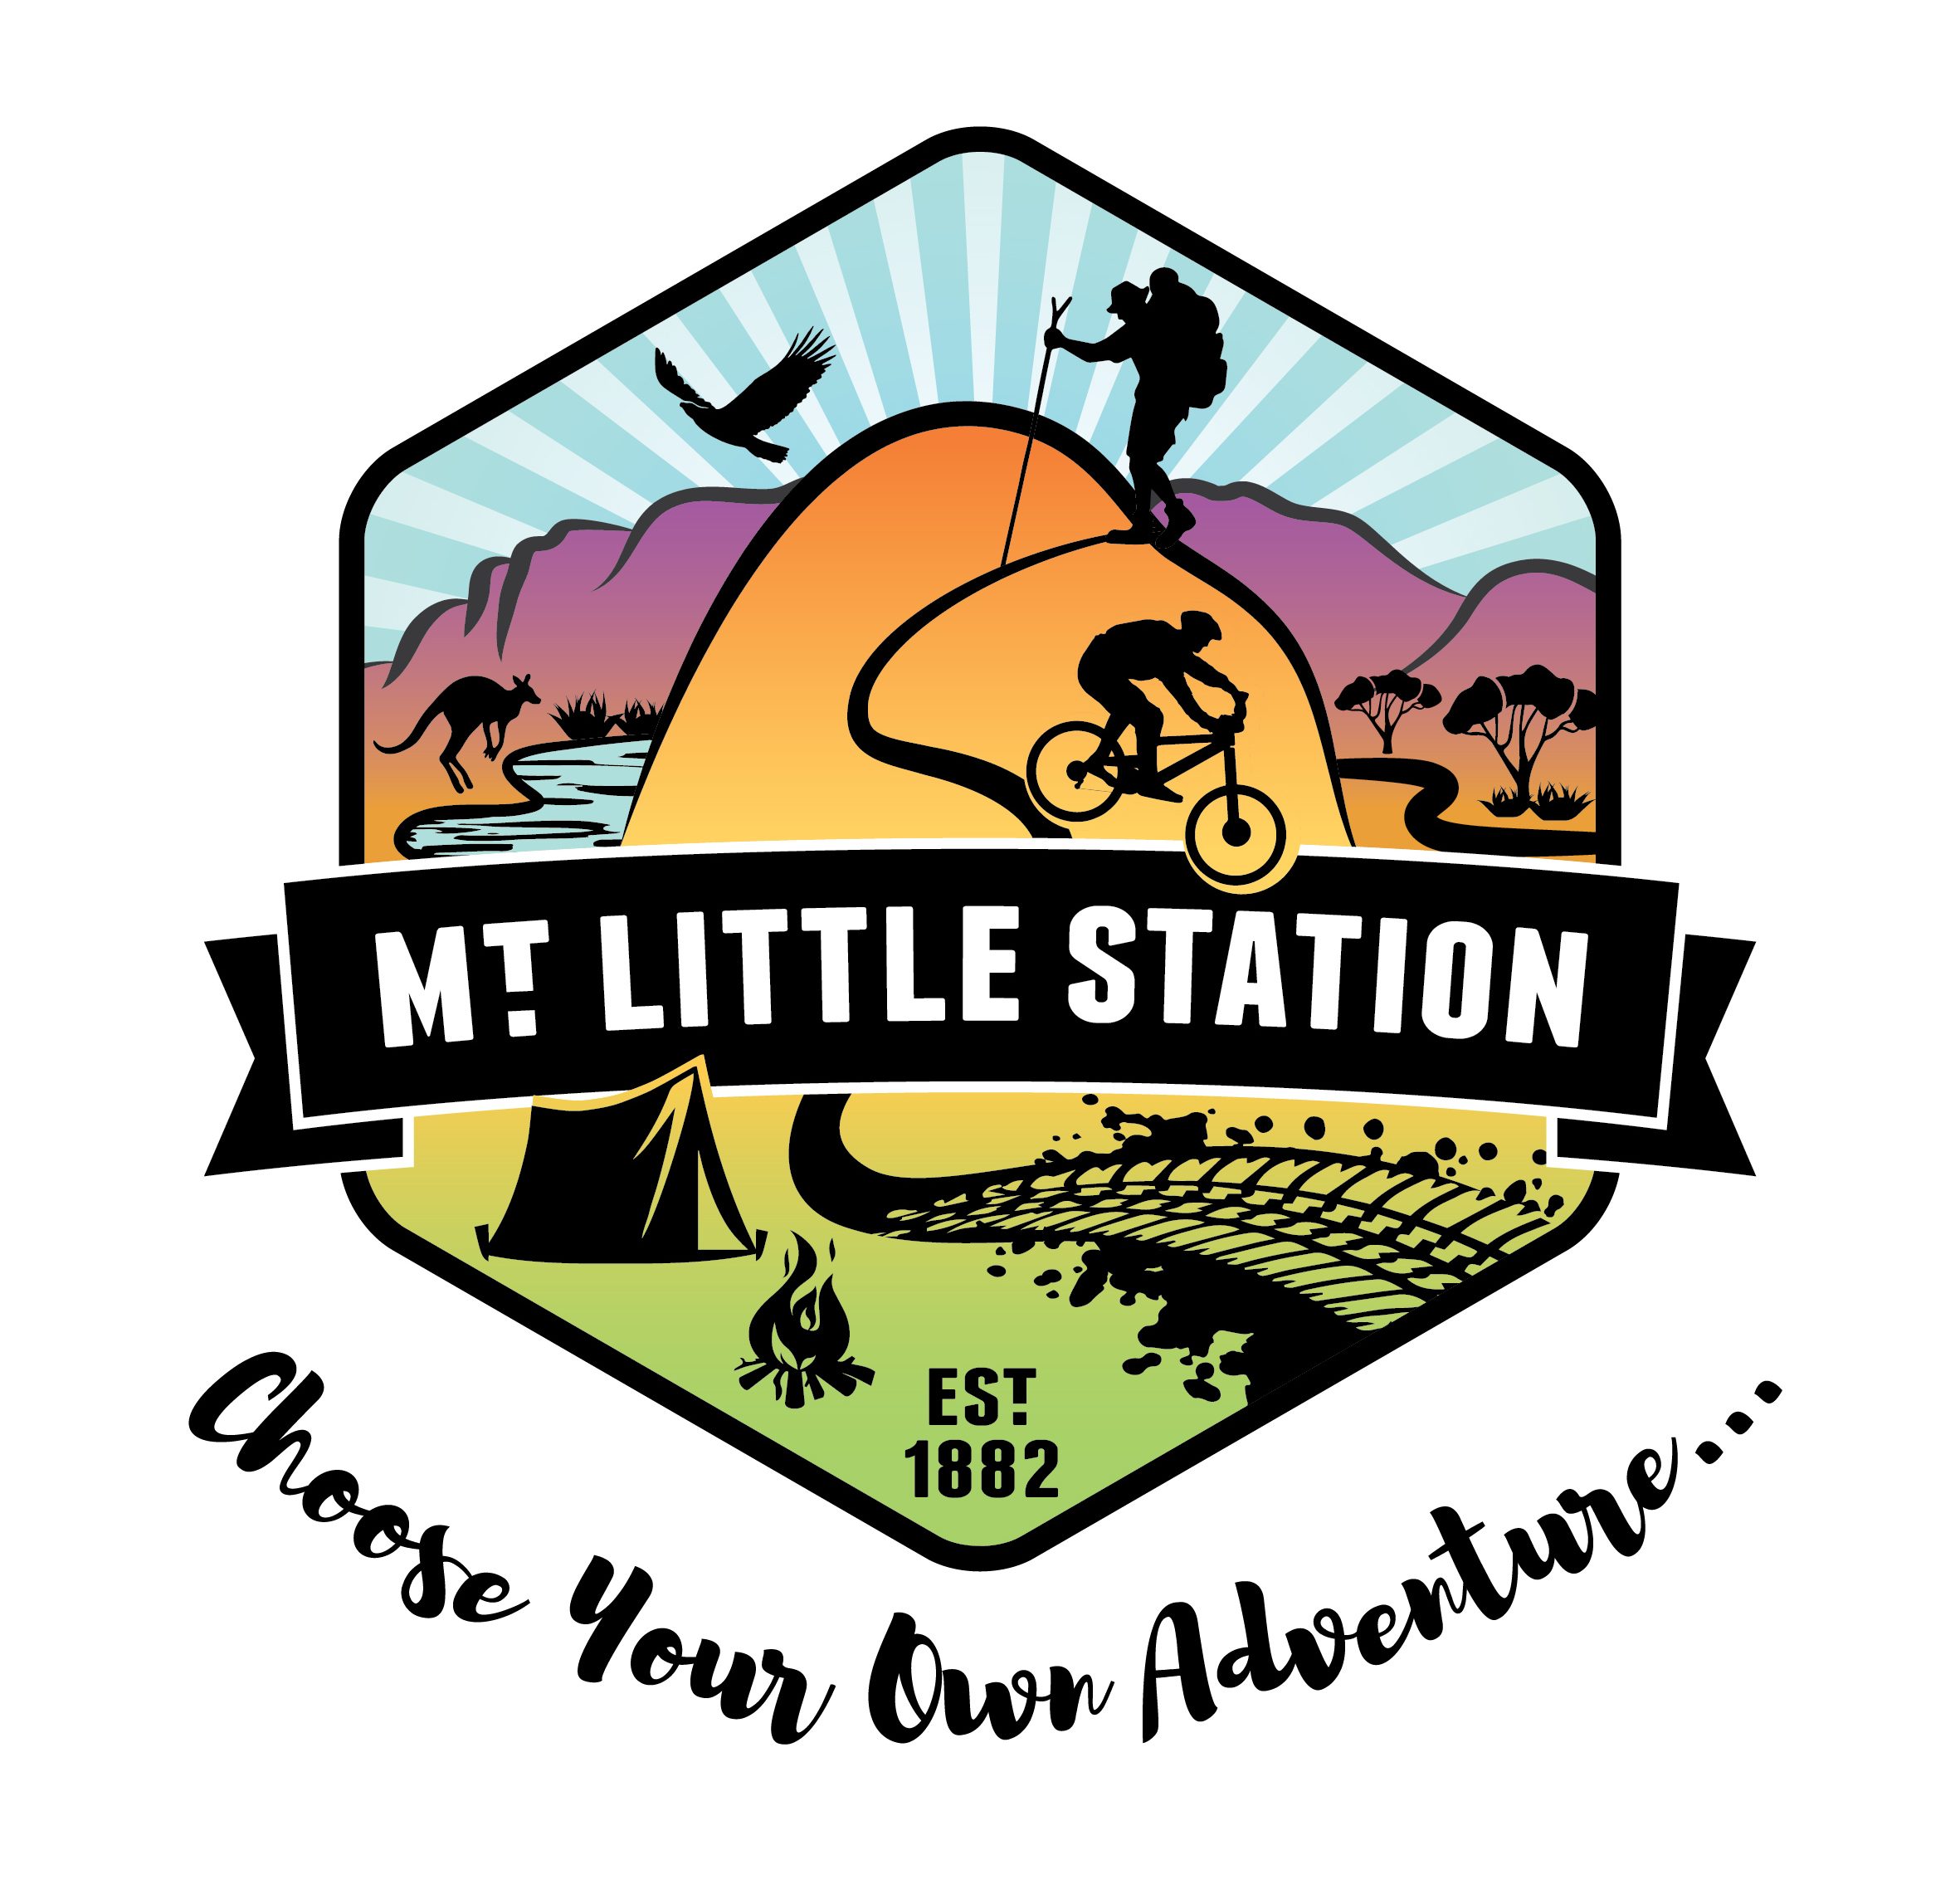 Mount Little Station